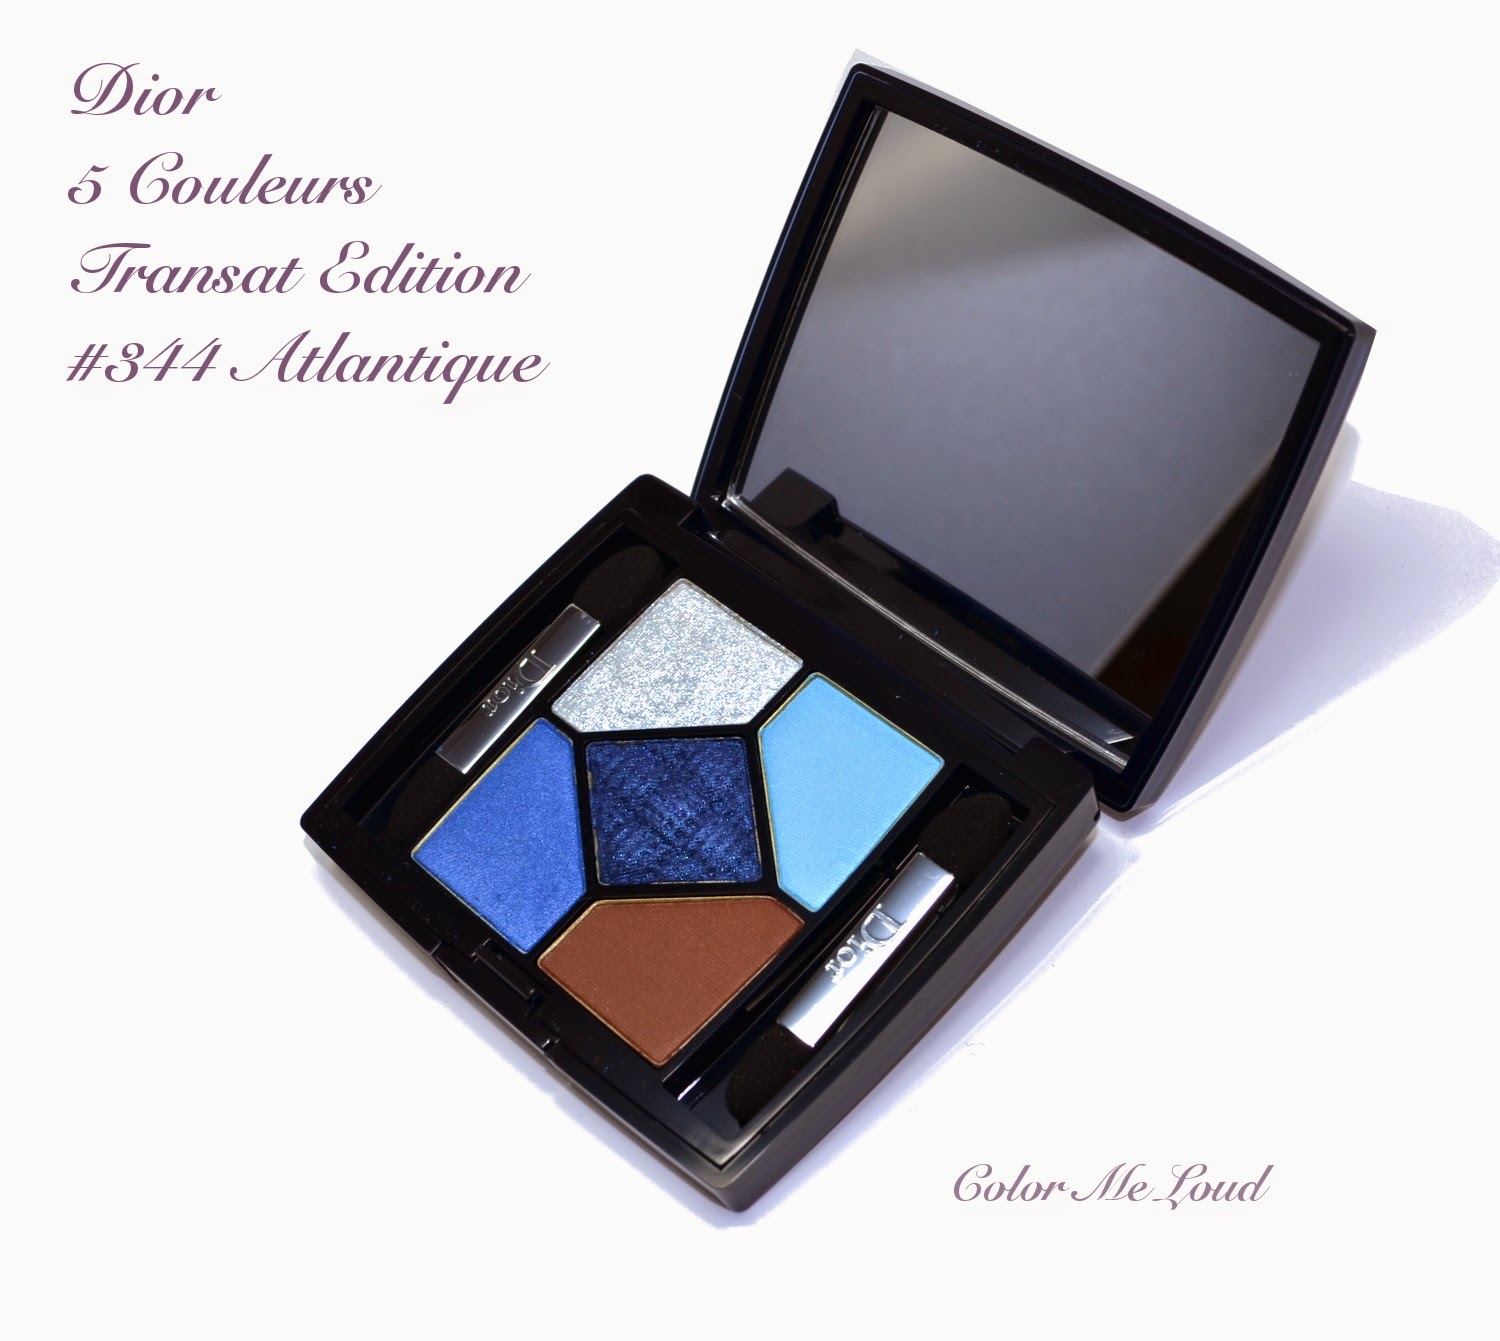 Dior 5 Couleurs Transat Edition #344 Atlantique for Transat Summer 2014 Collection, Review, Swatches & FOTD